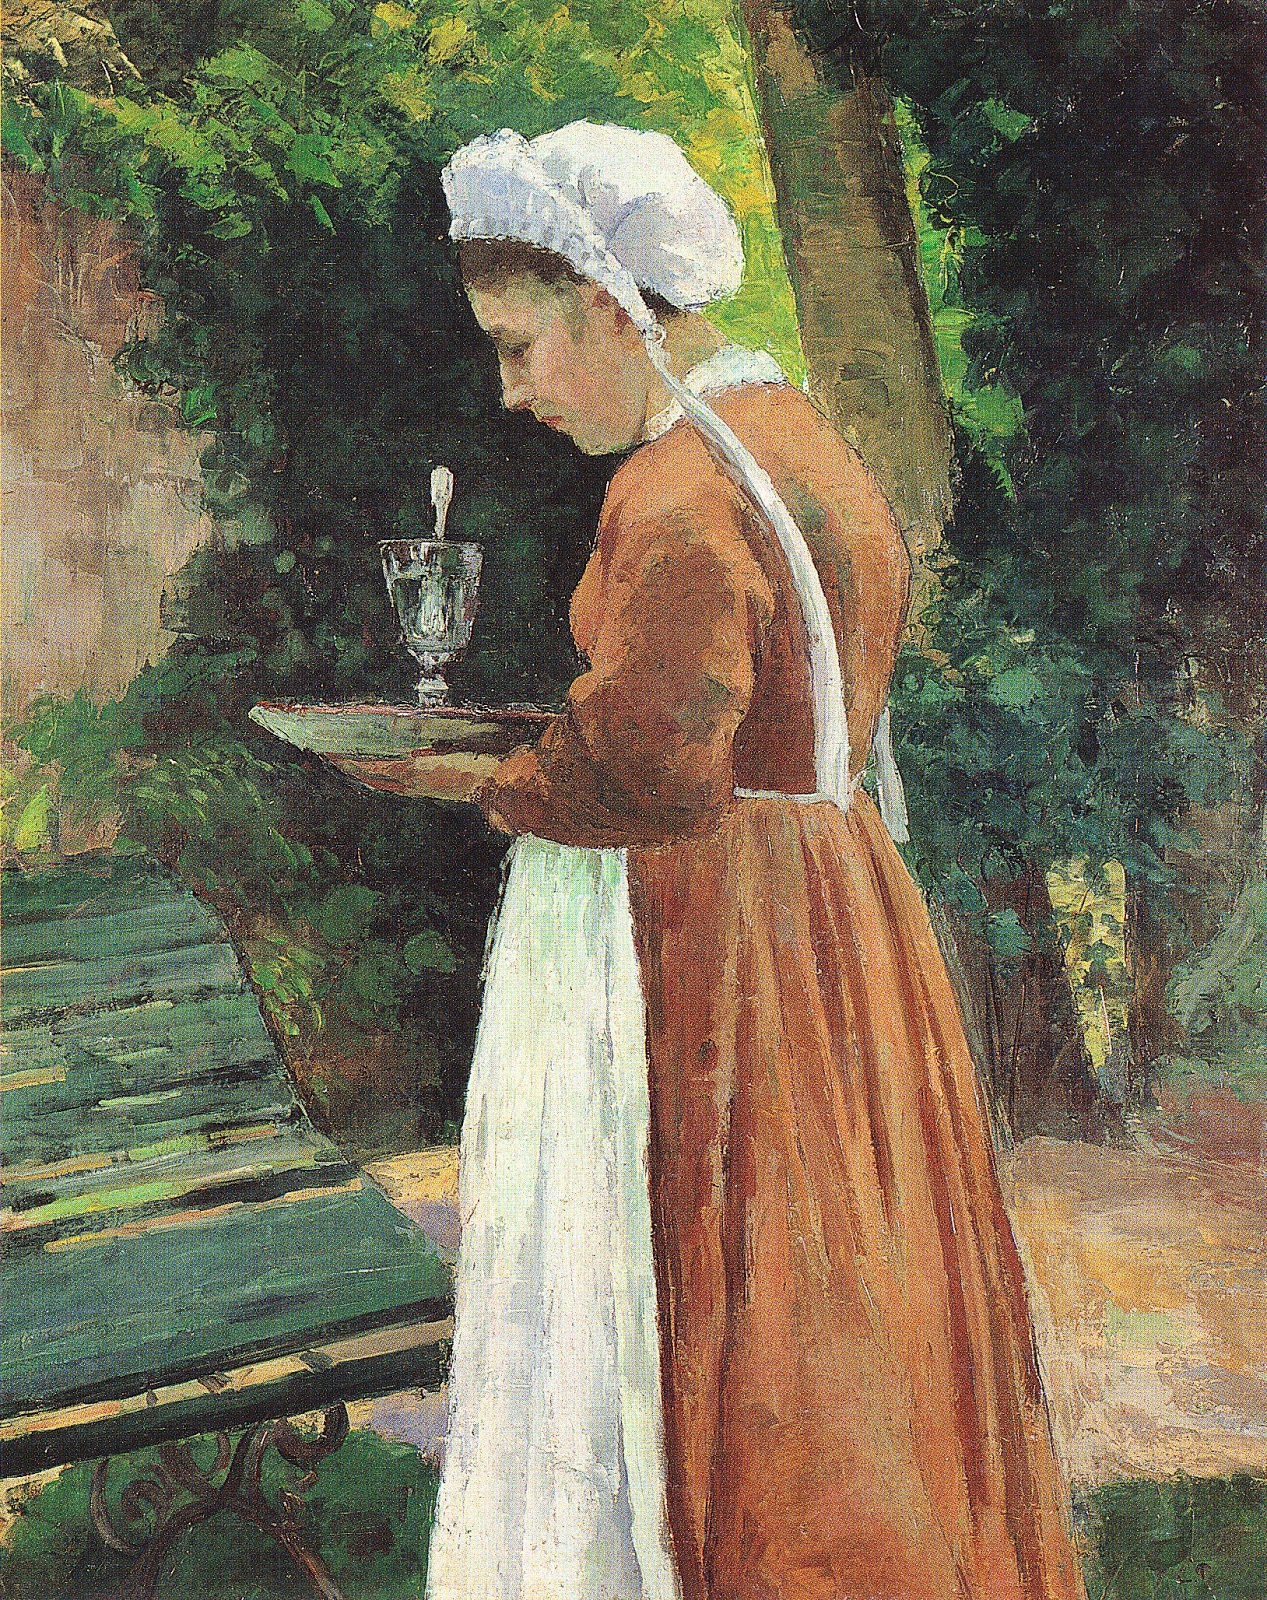 Camille+Pissarro-1830-1903 (219).jpg